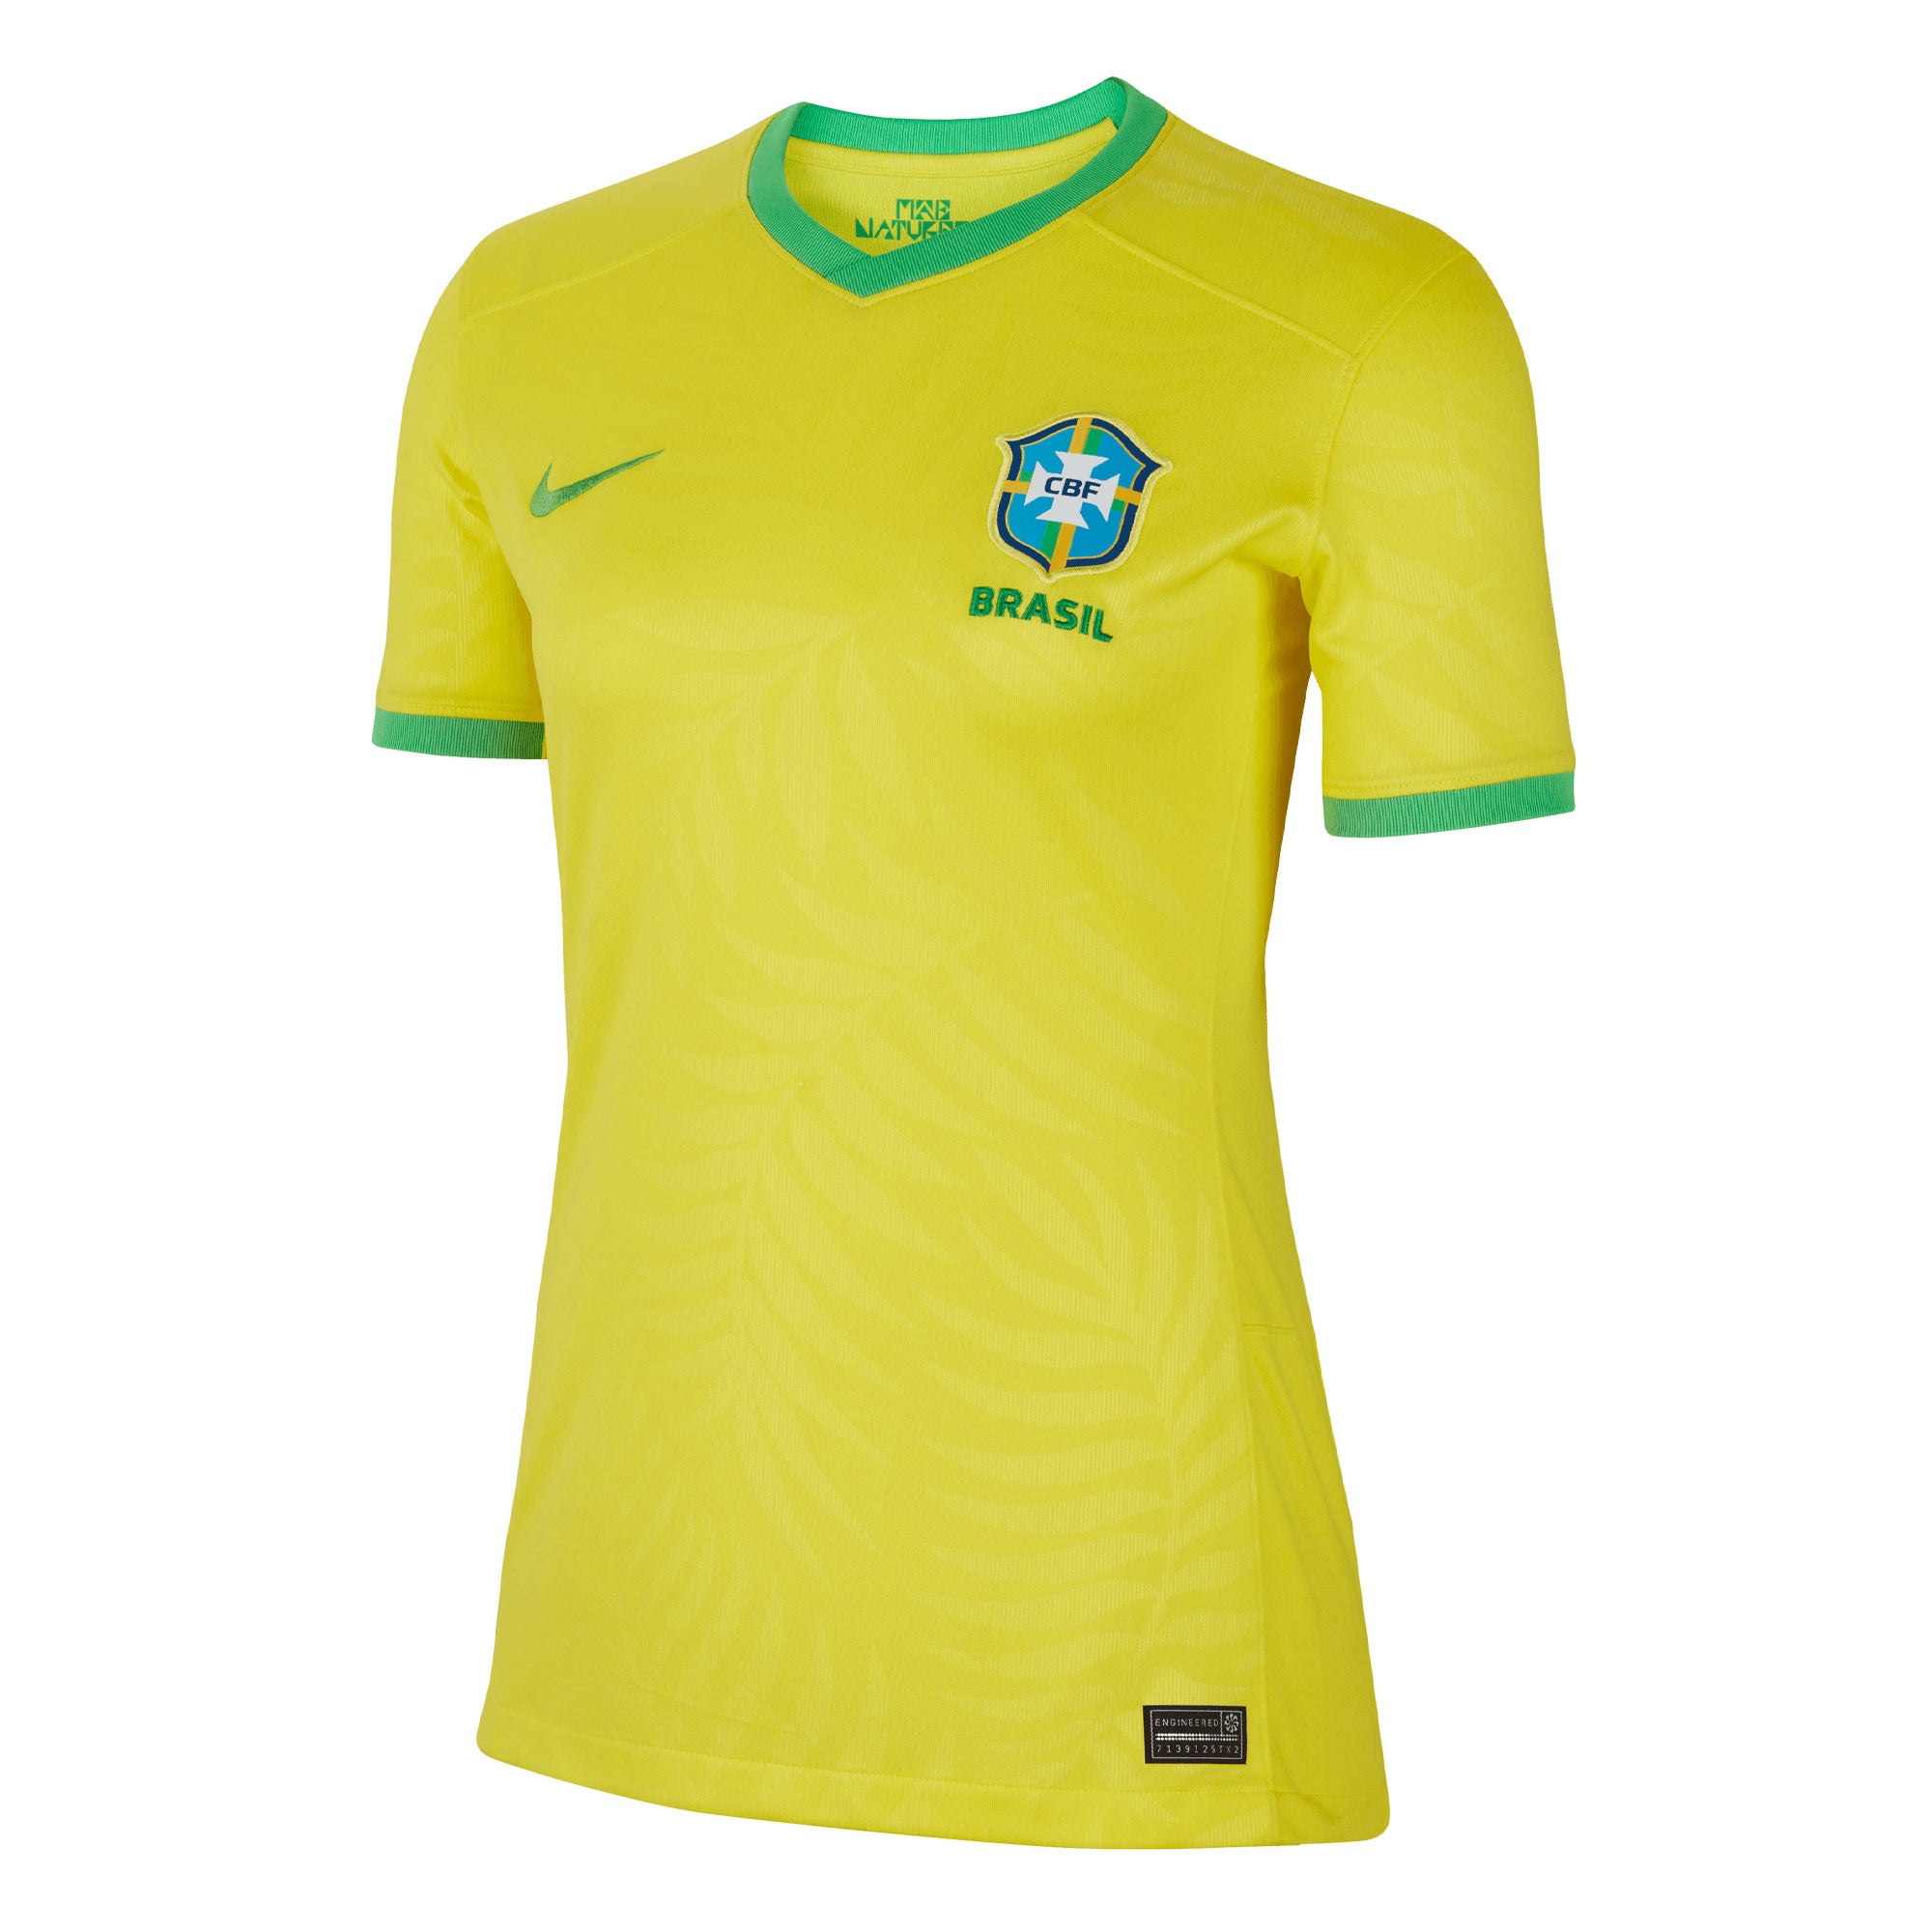 Nike Brazil CBF Soccer Jersey No 5 LAURIE Women's Size Large - NEW